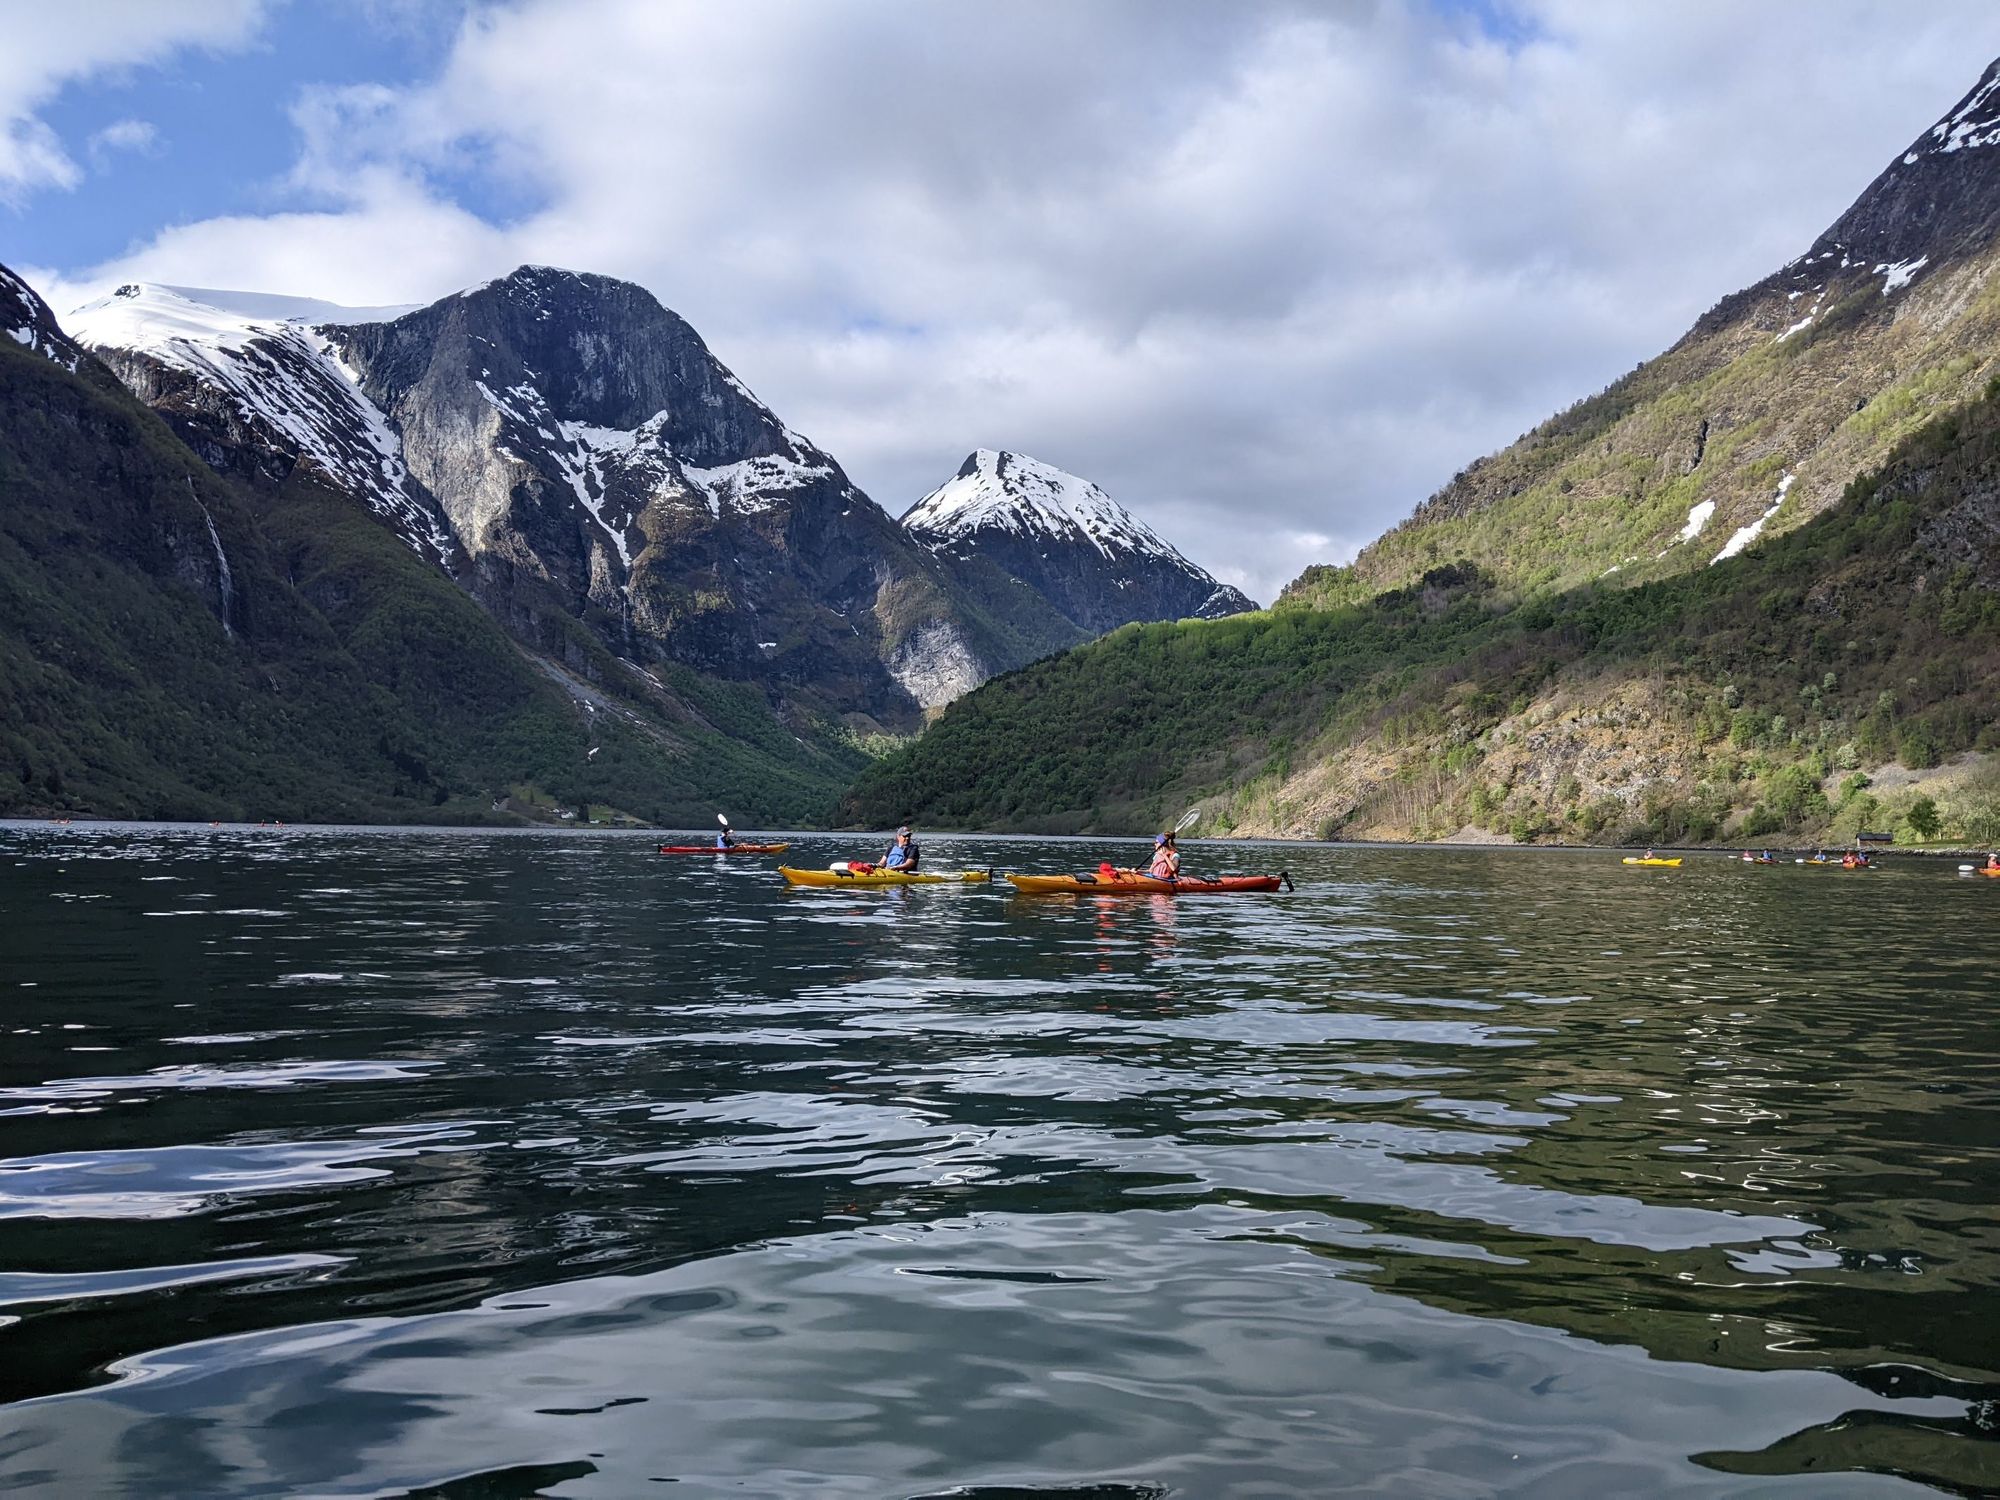 Kayaking in the Nærøyfjord